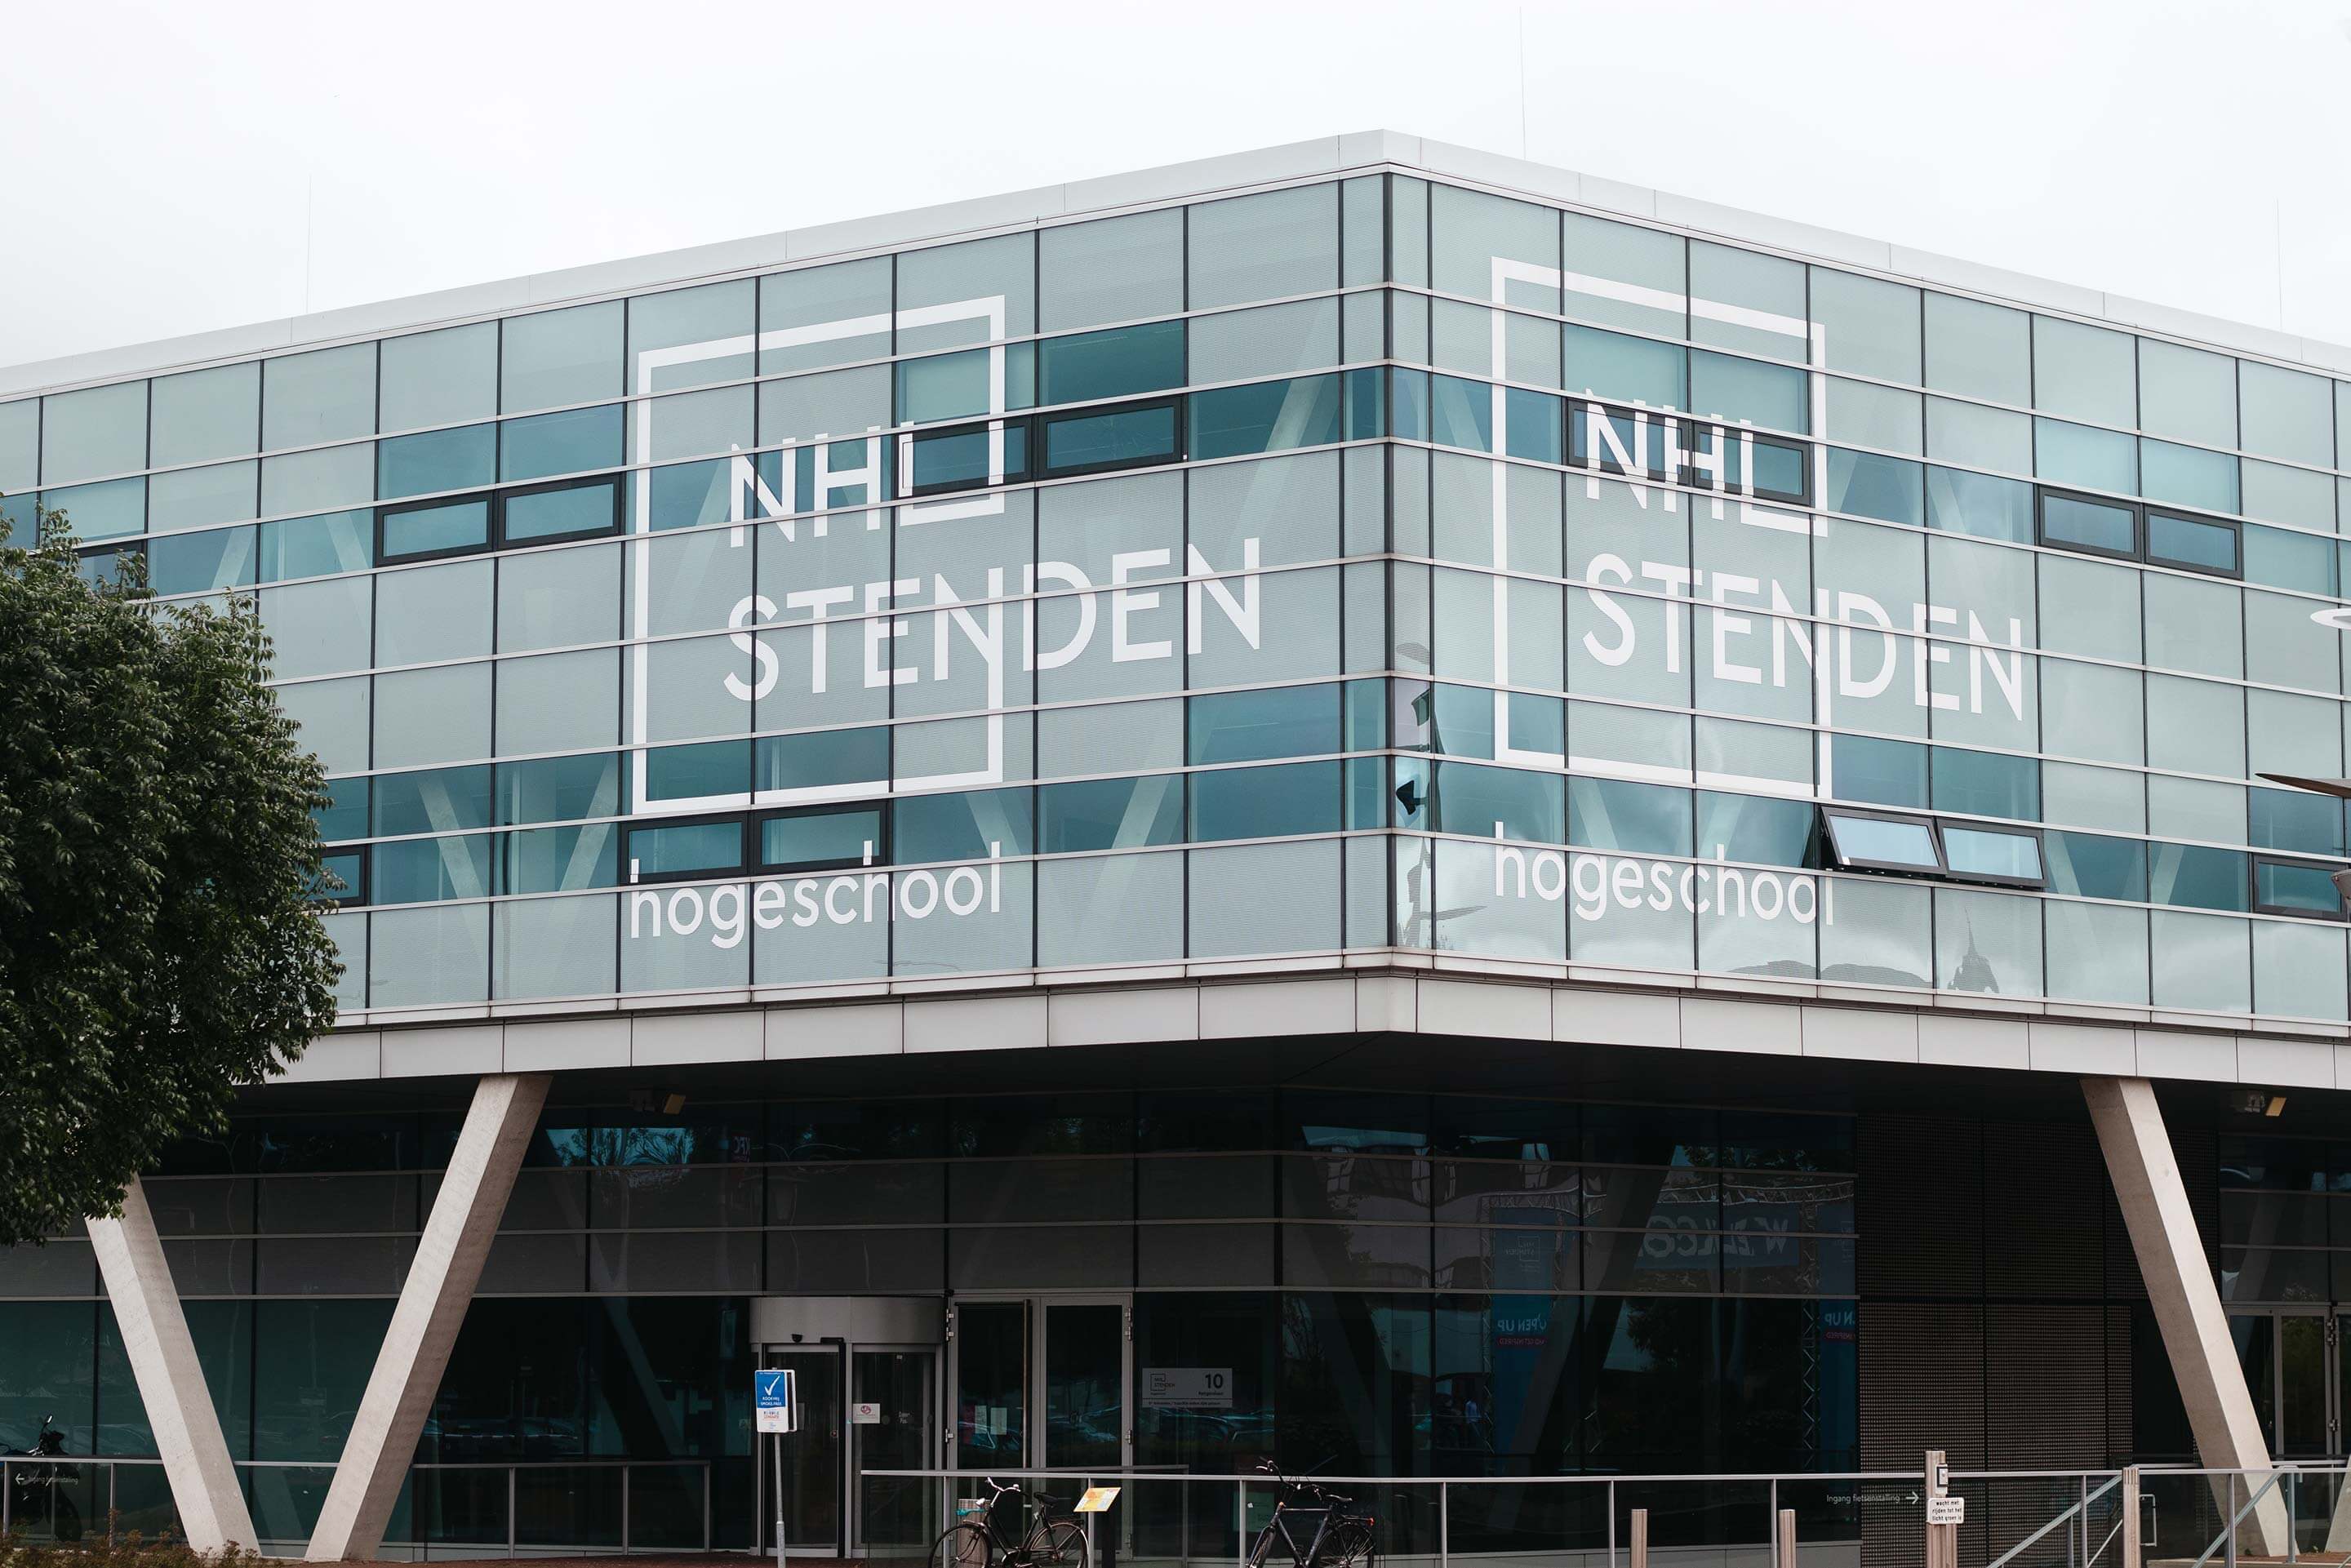 Glazen schoolgebouw NHL Stenden hogeschool Leeuwarden